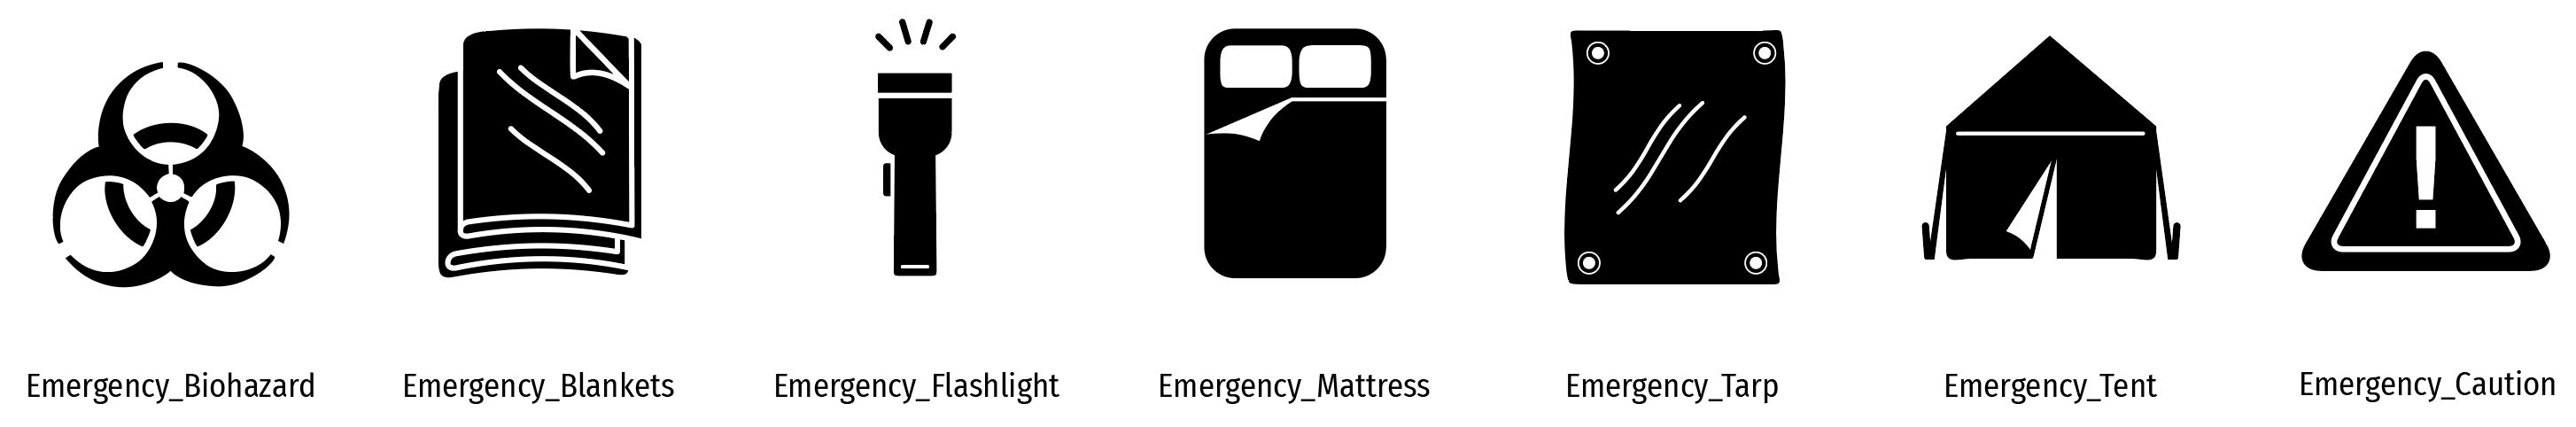 Emergency_icons